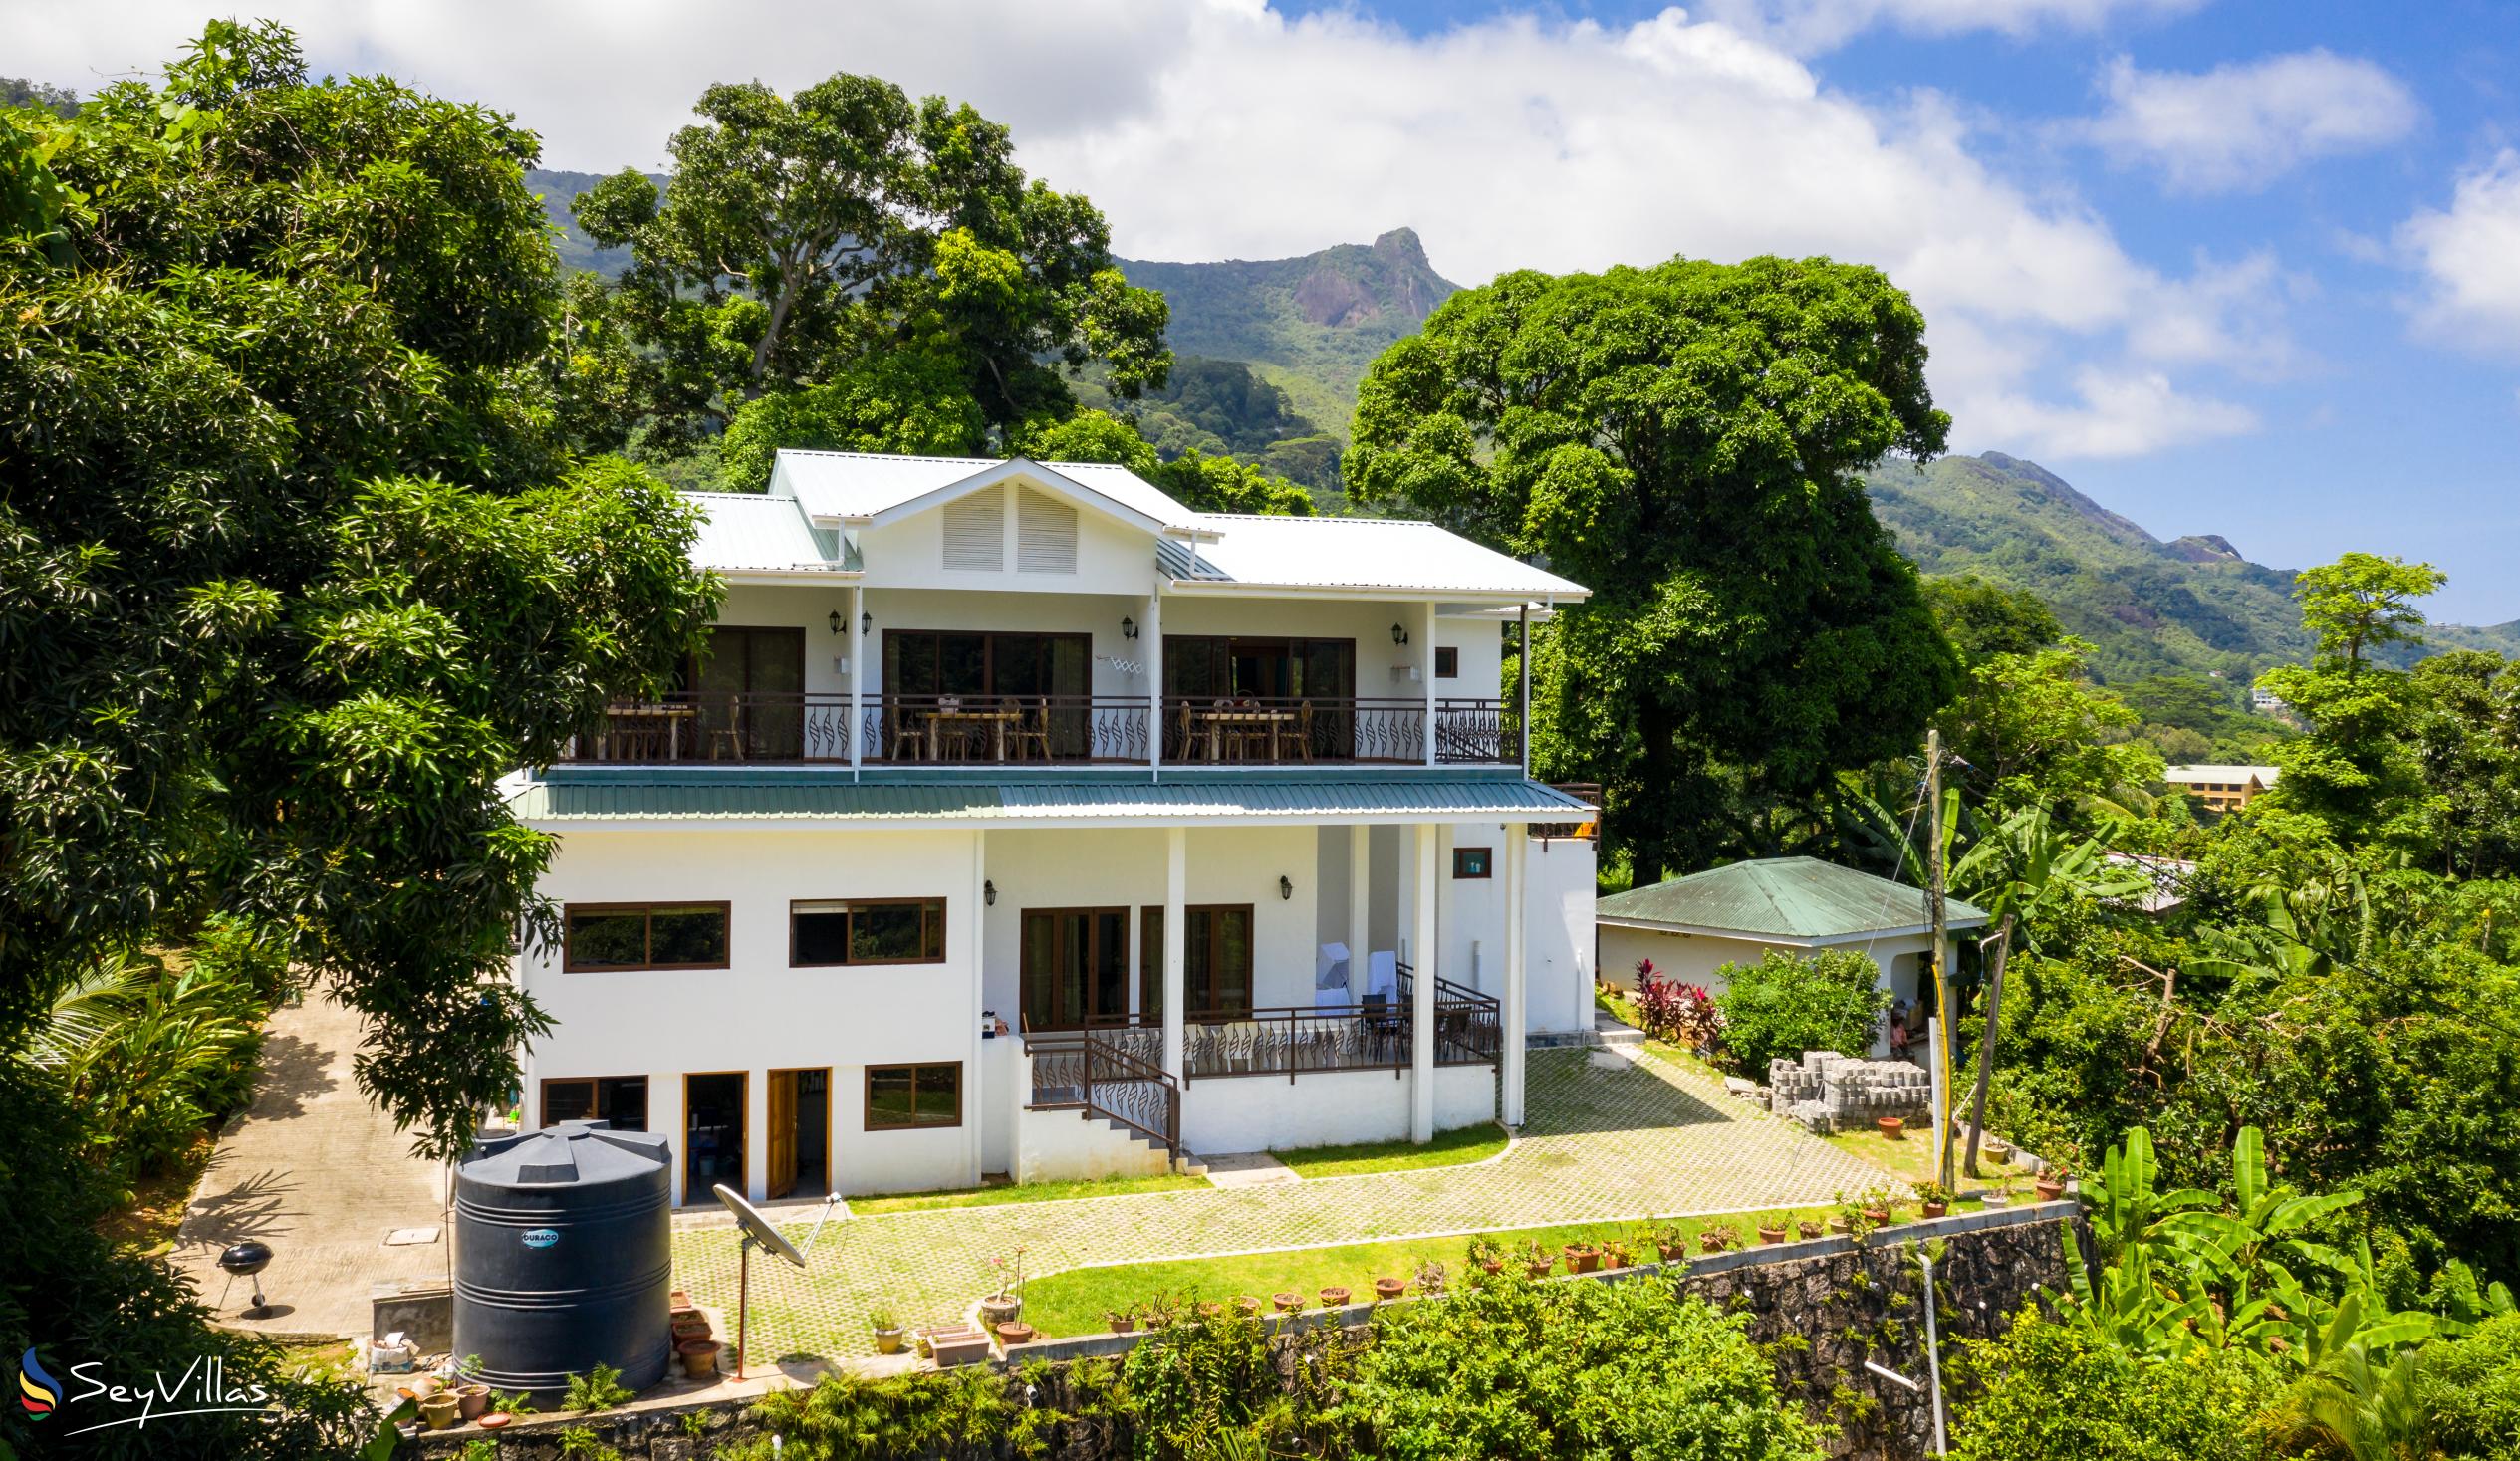 Foto 3: Tama's Holiday Apartments - Aussenbereich - Mahé (Seychellen)